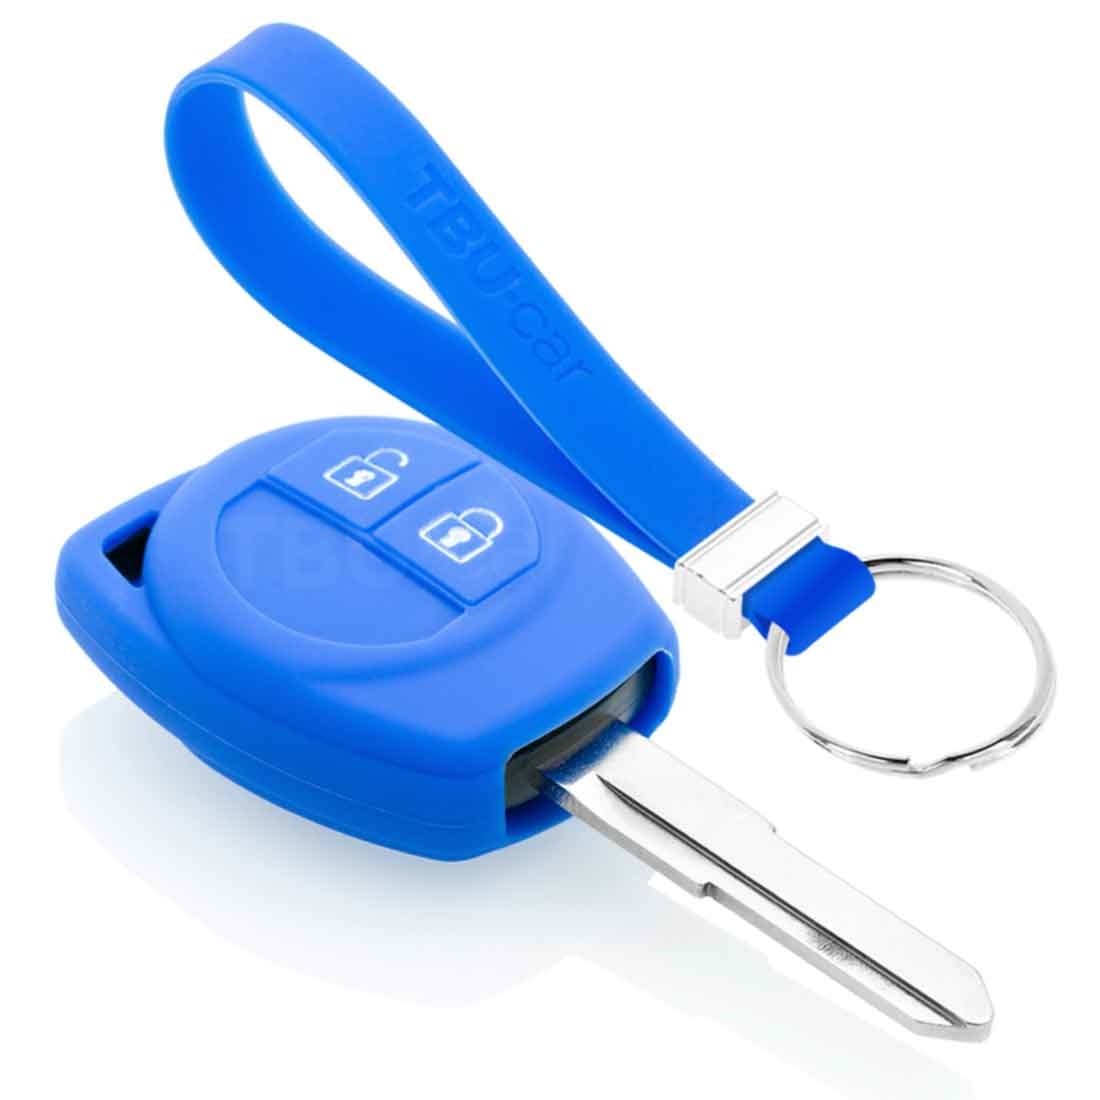 TBU car TBU car Autoschlüssel Hülle kompatibel mit Suzuki 2 Tasten - Schutzhülle aus Silikon - Auto Schlüsselhülle Cover in Blau